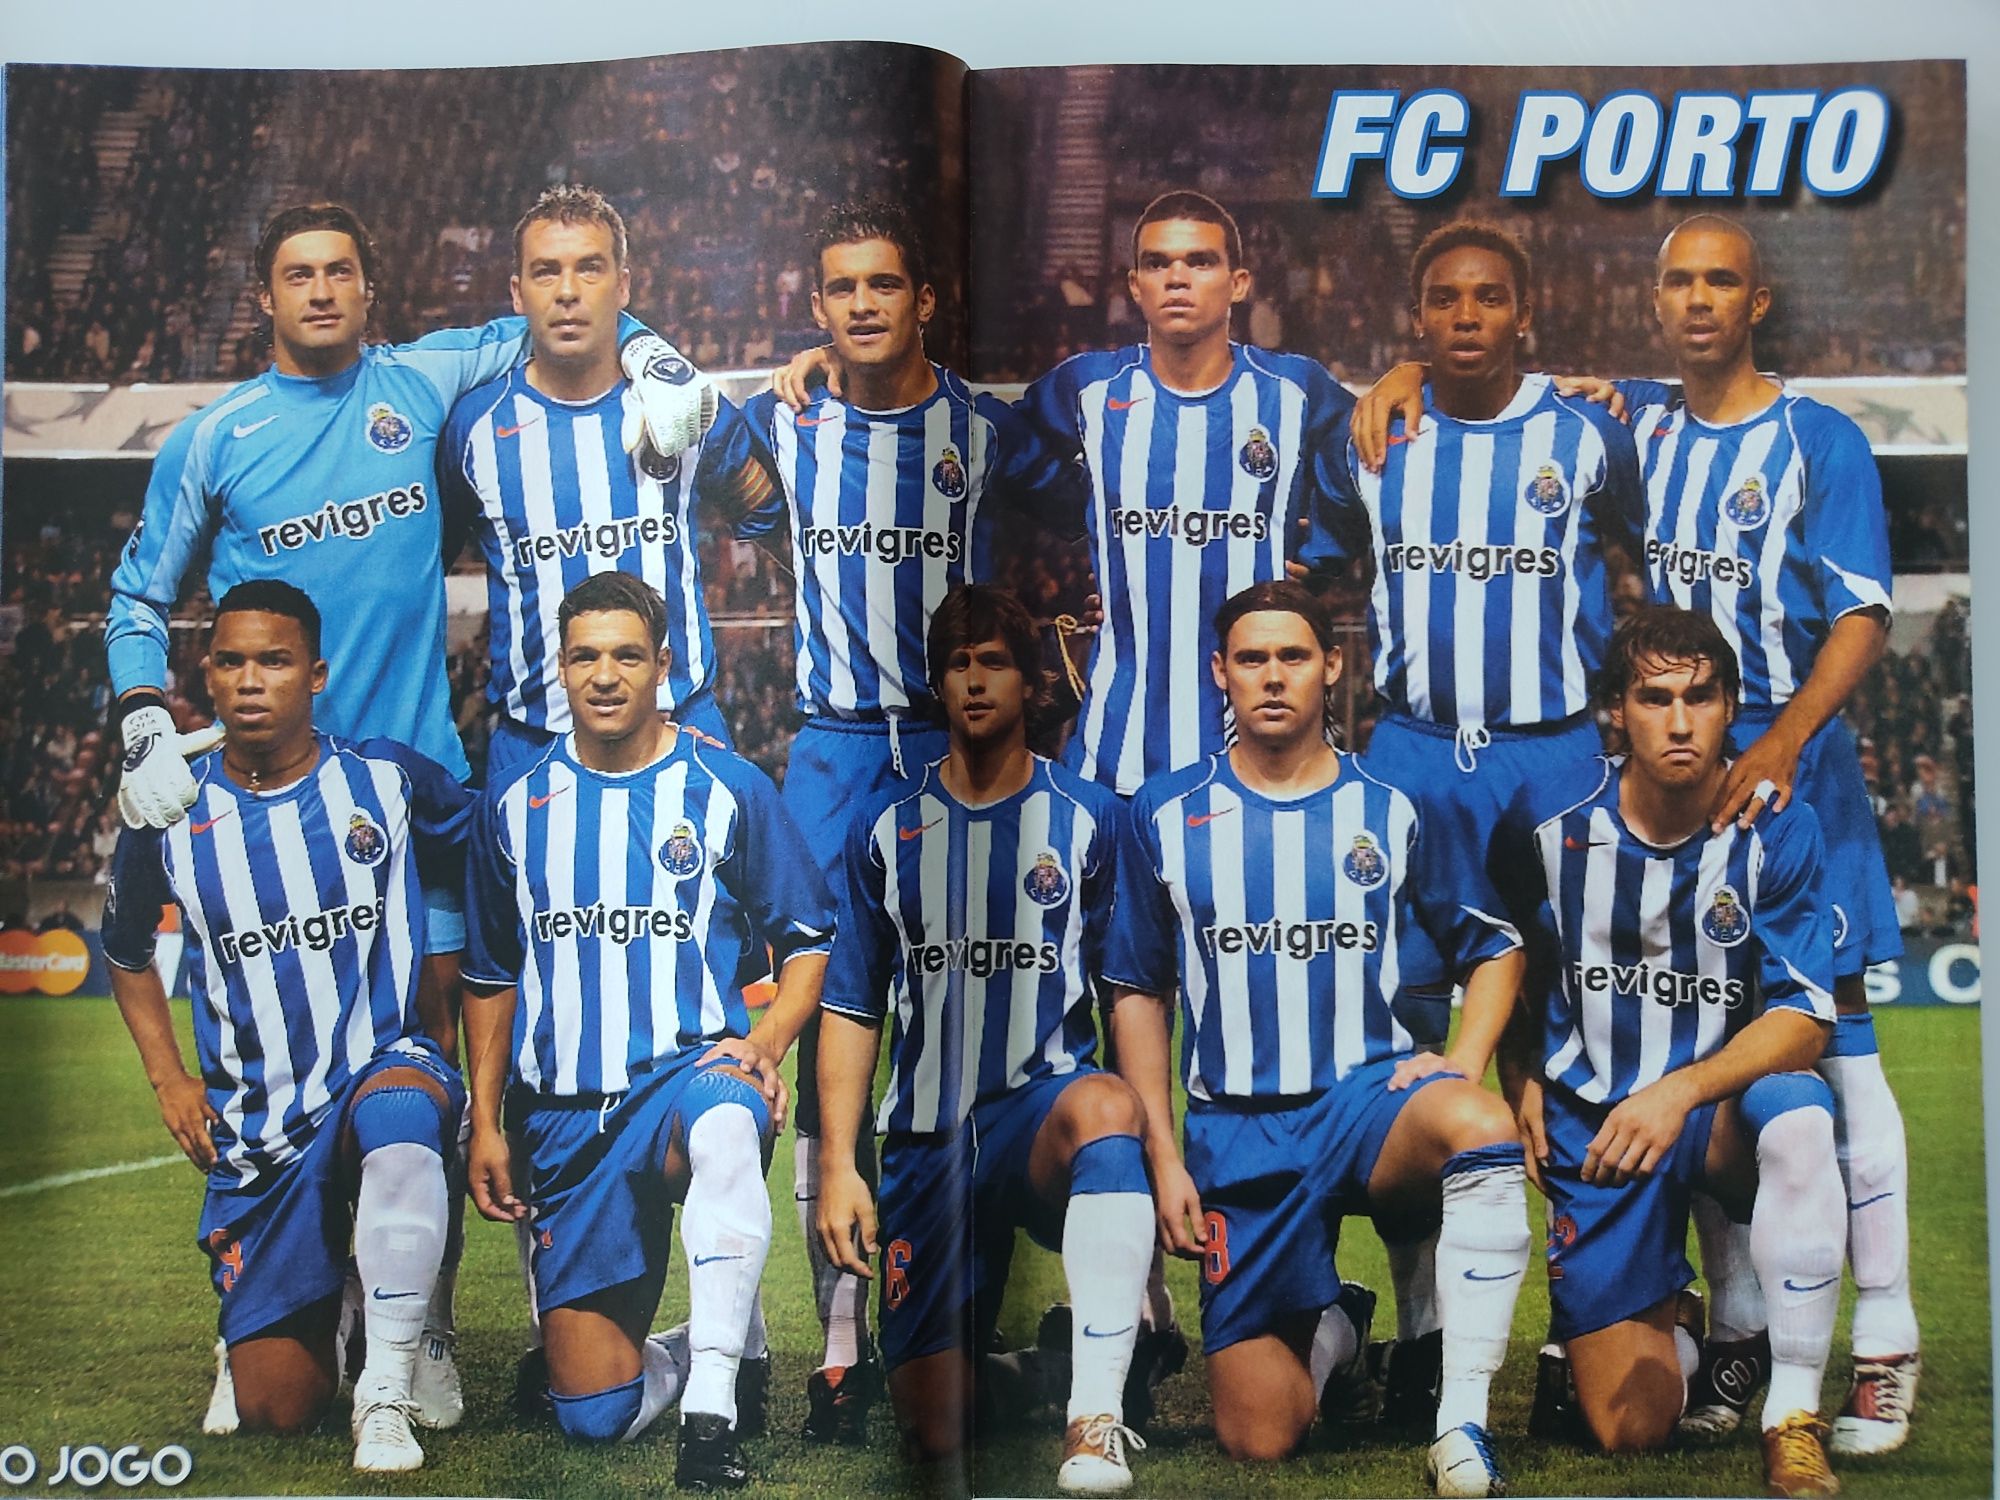 Programa do FC Porto Paris SG Champions league 2004/2005